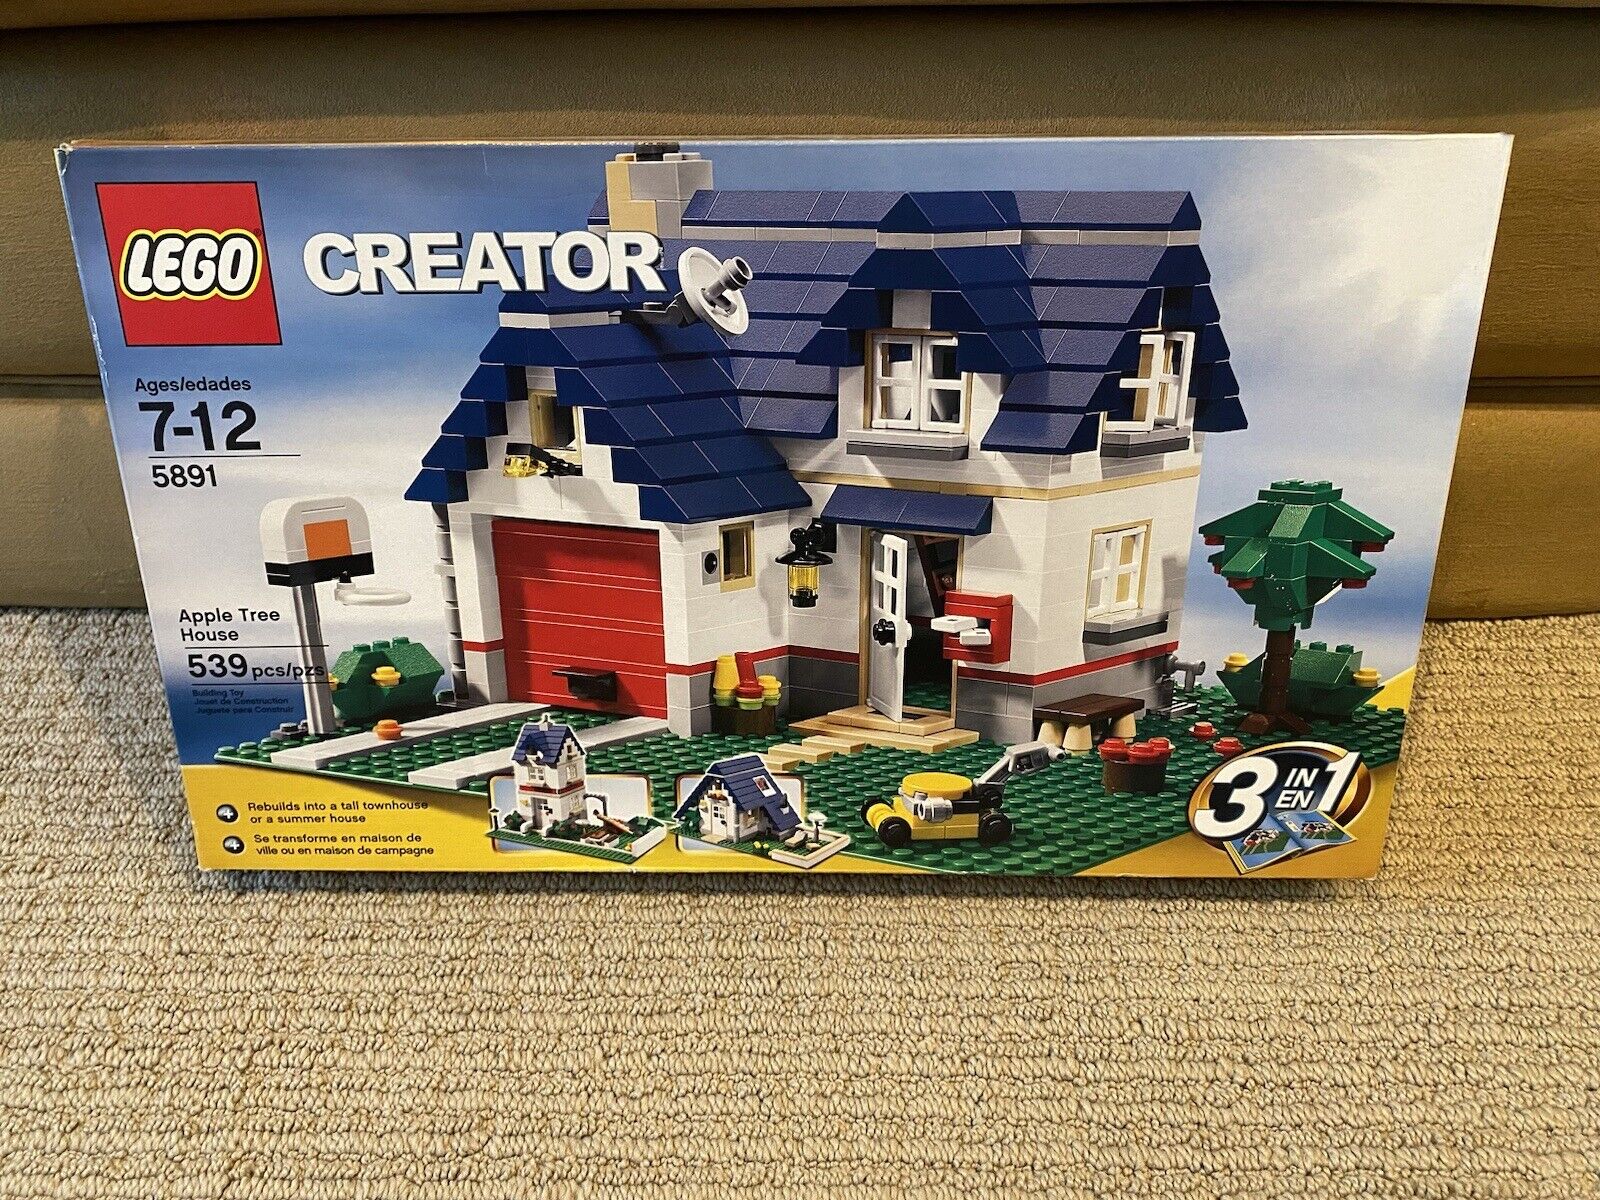 Lego Creator 5891 Apple Tree House 3 in 1 set